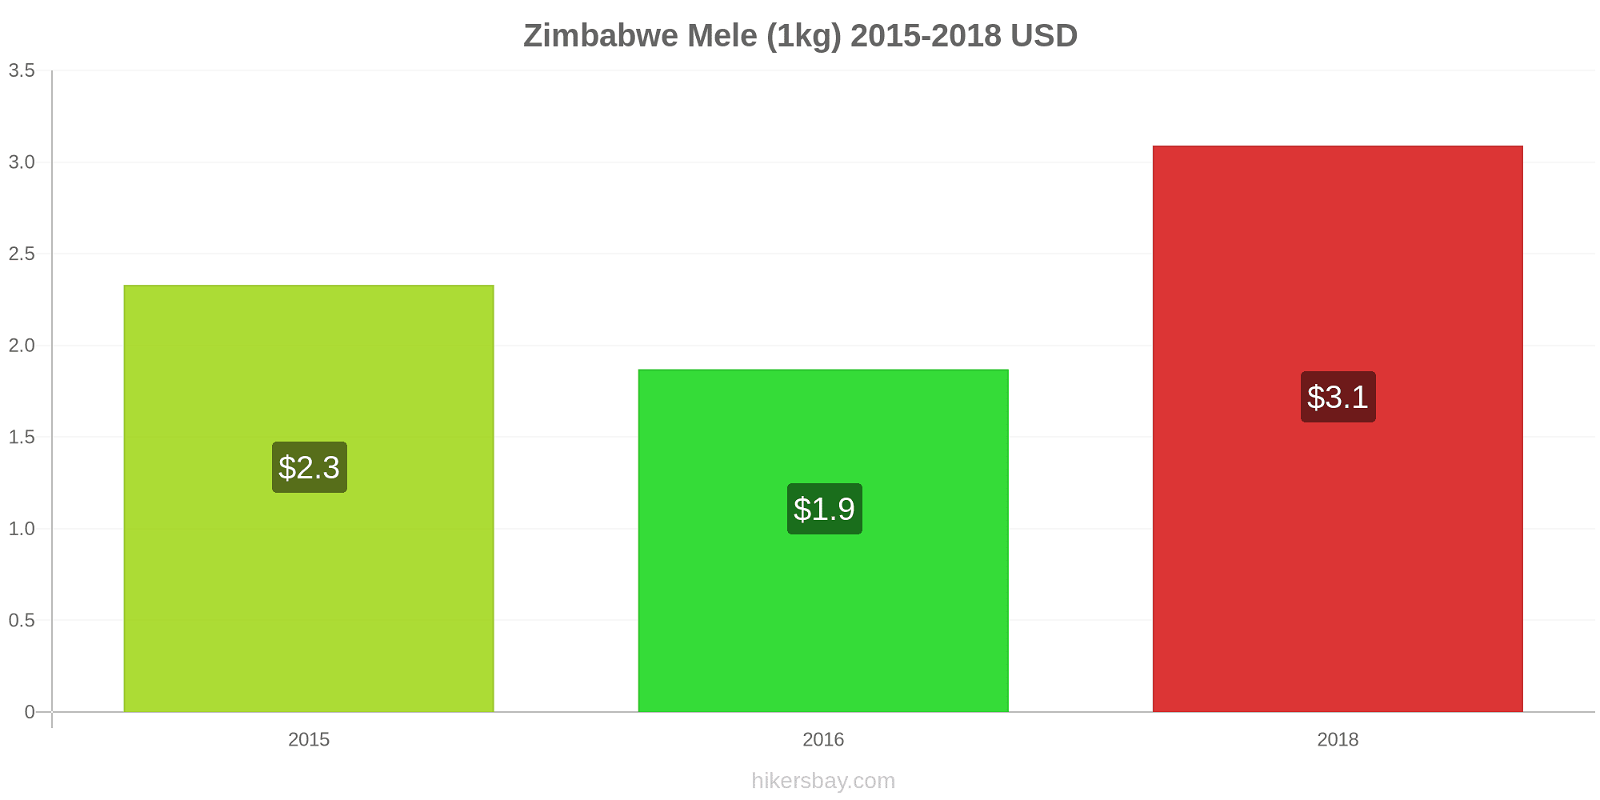 Zimbabwe variazioni di prezzo Mele (1kg) hikersbay.com